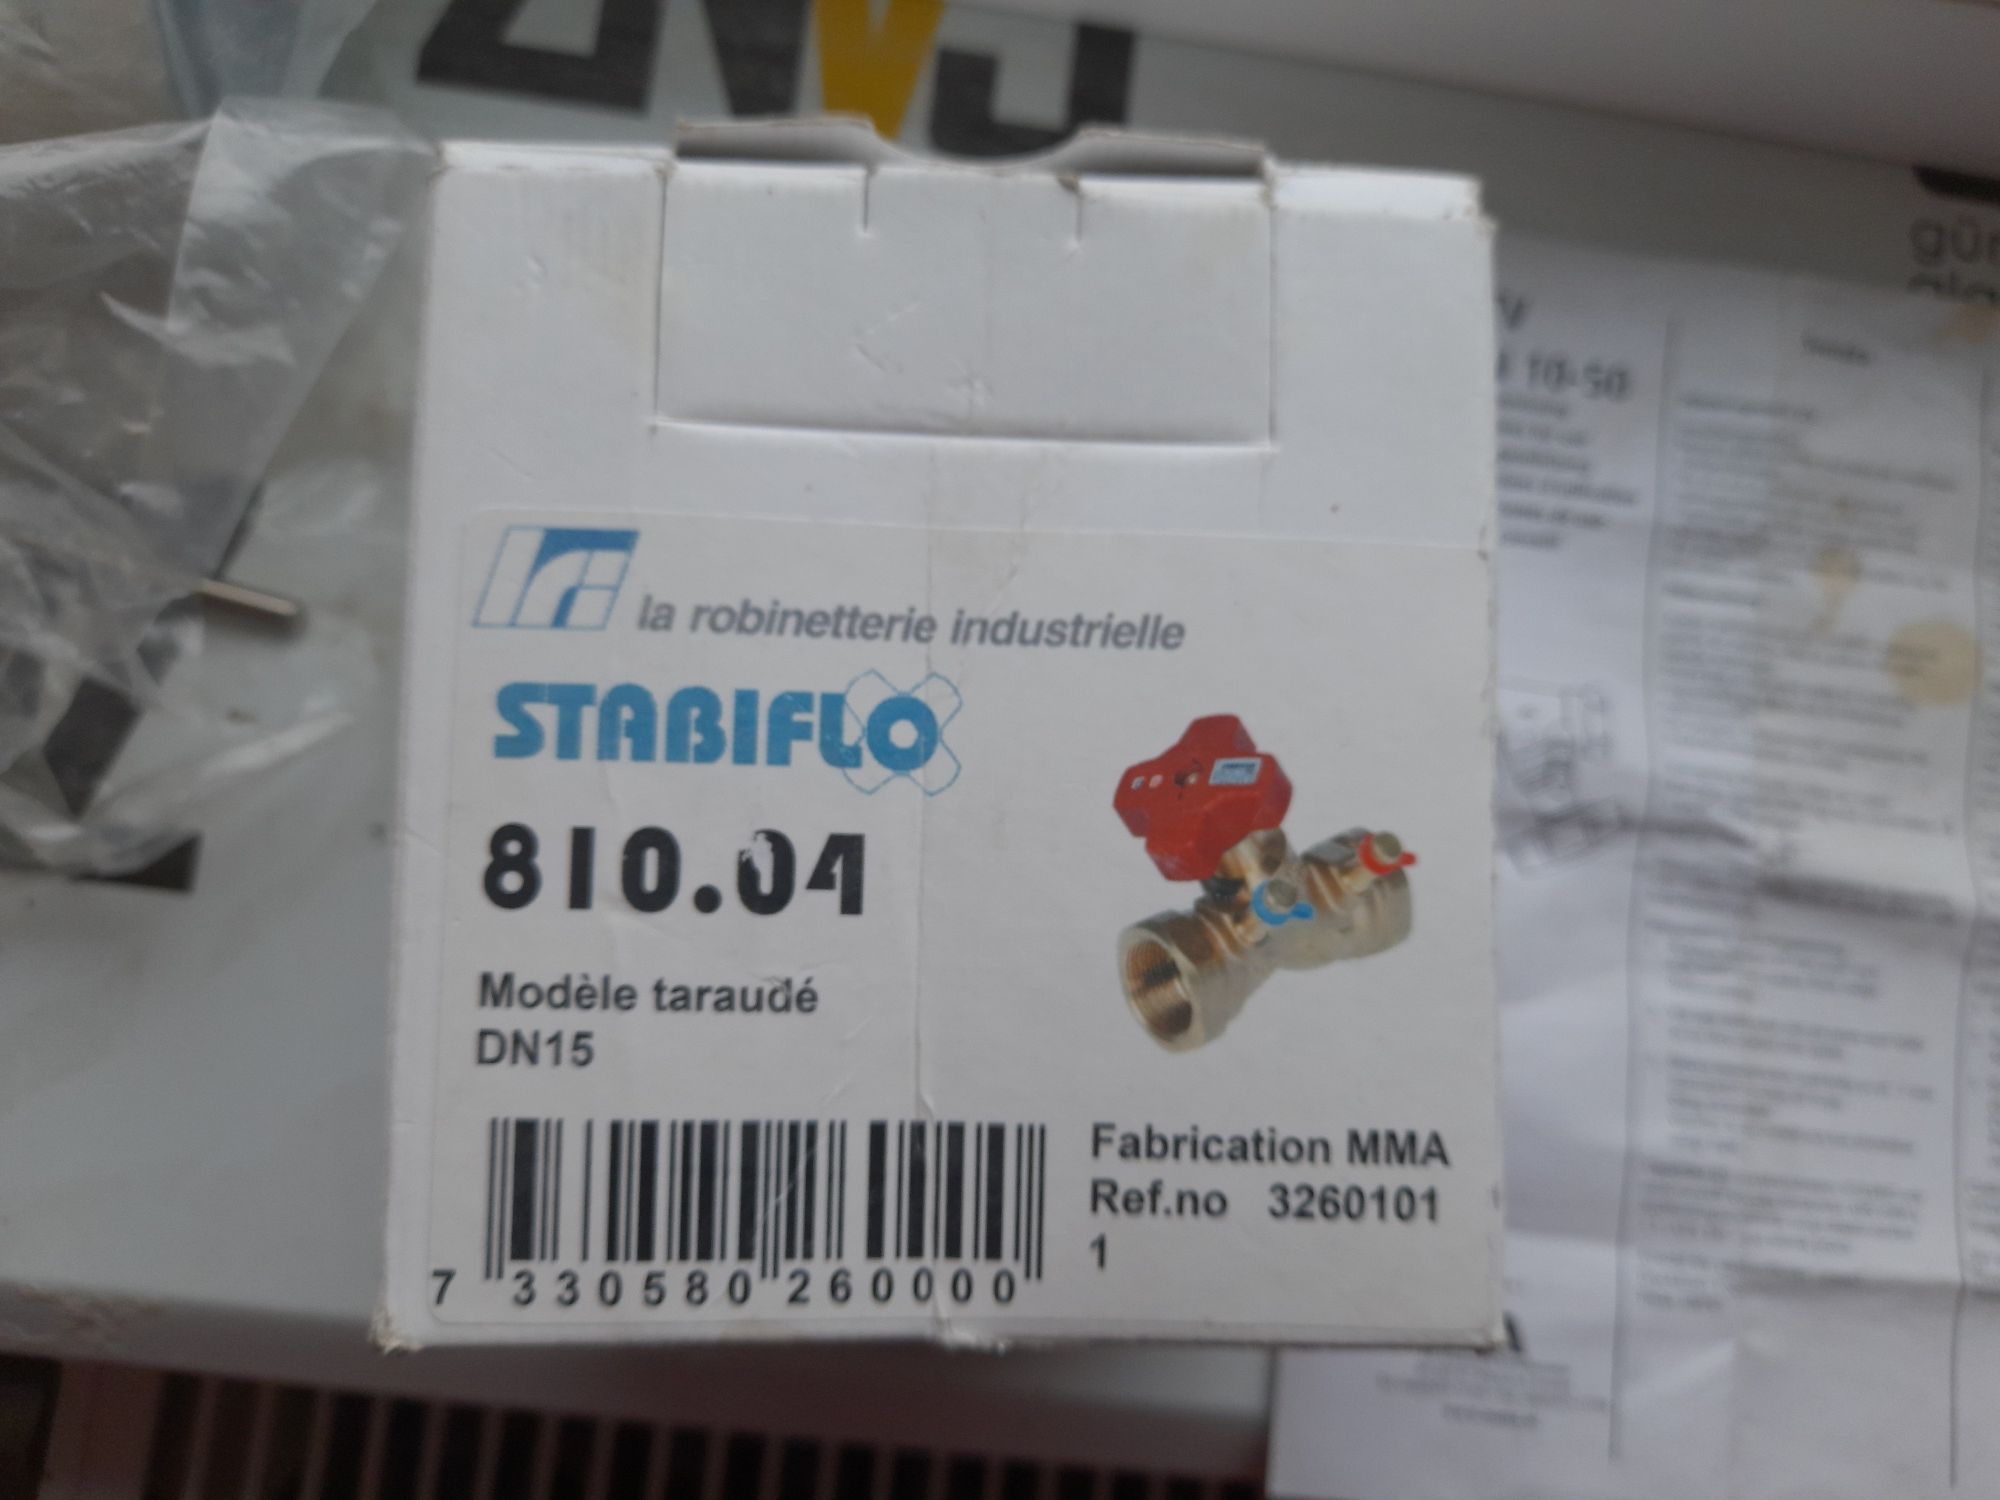 Клапан балансувальний STABIFLO 810.04 Modele taraude DN 16